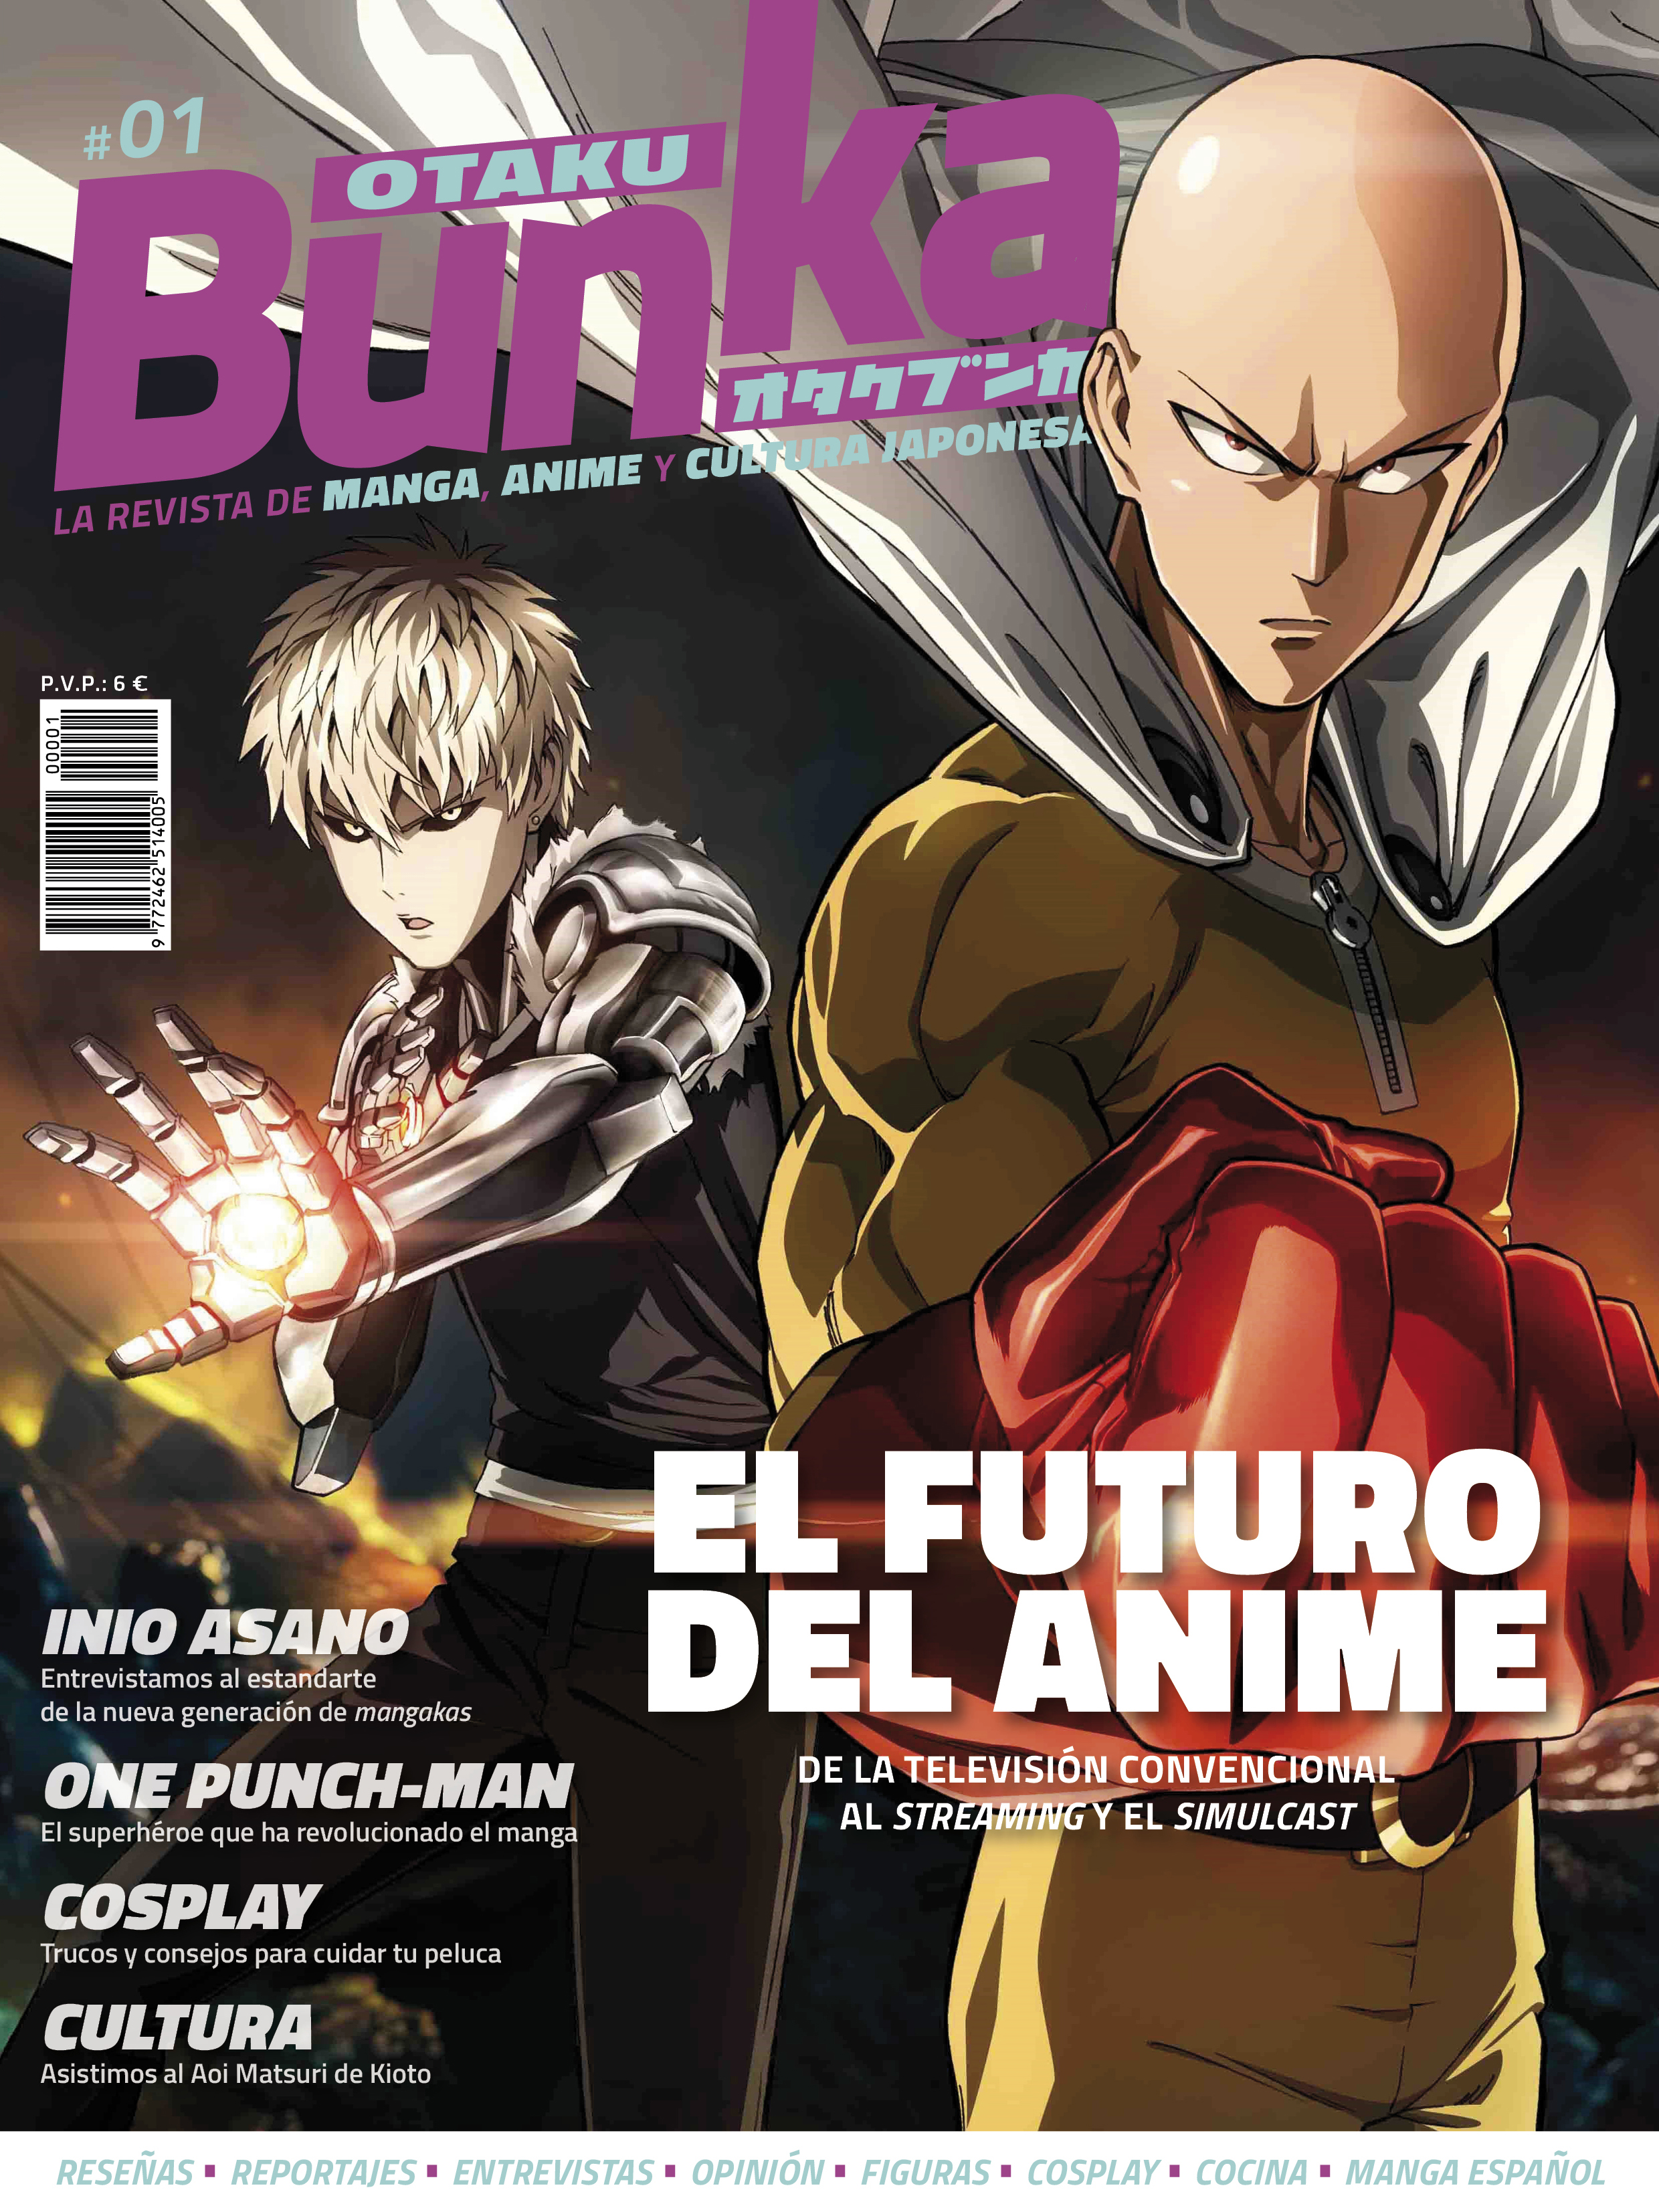 Otaku Bunka, nueva revista de manga, anime y cultura japonesa